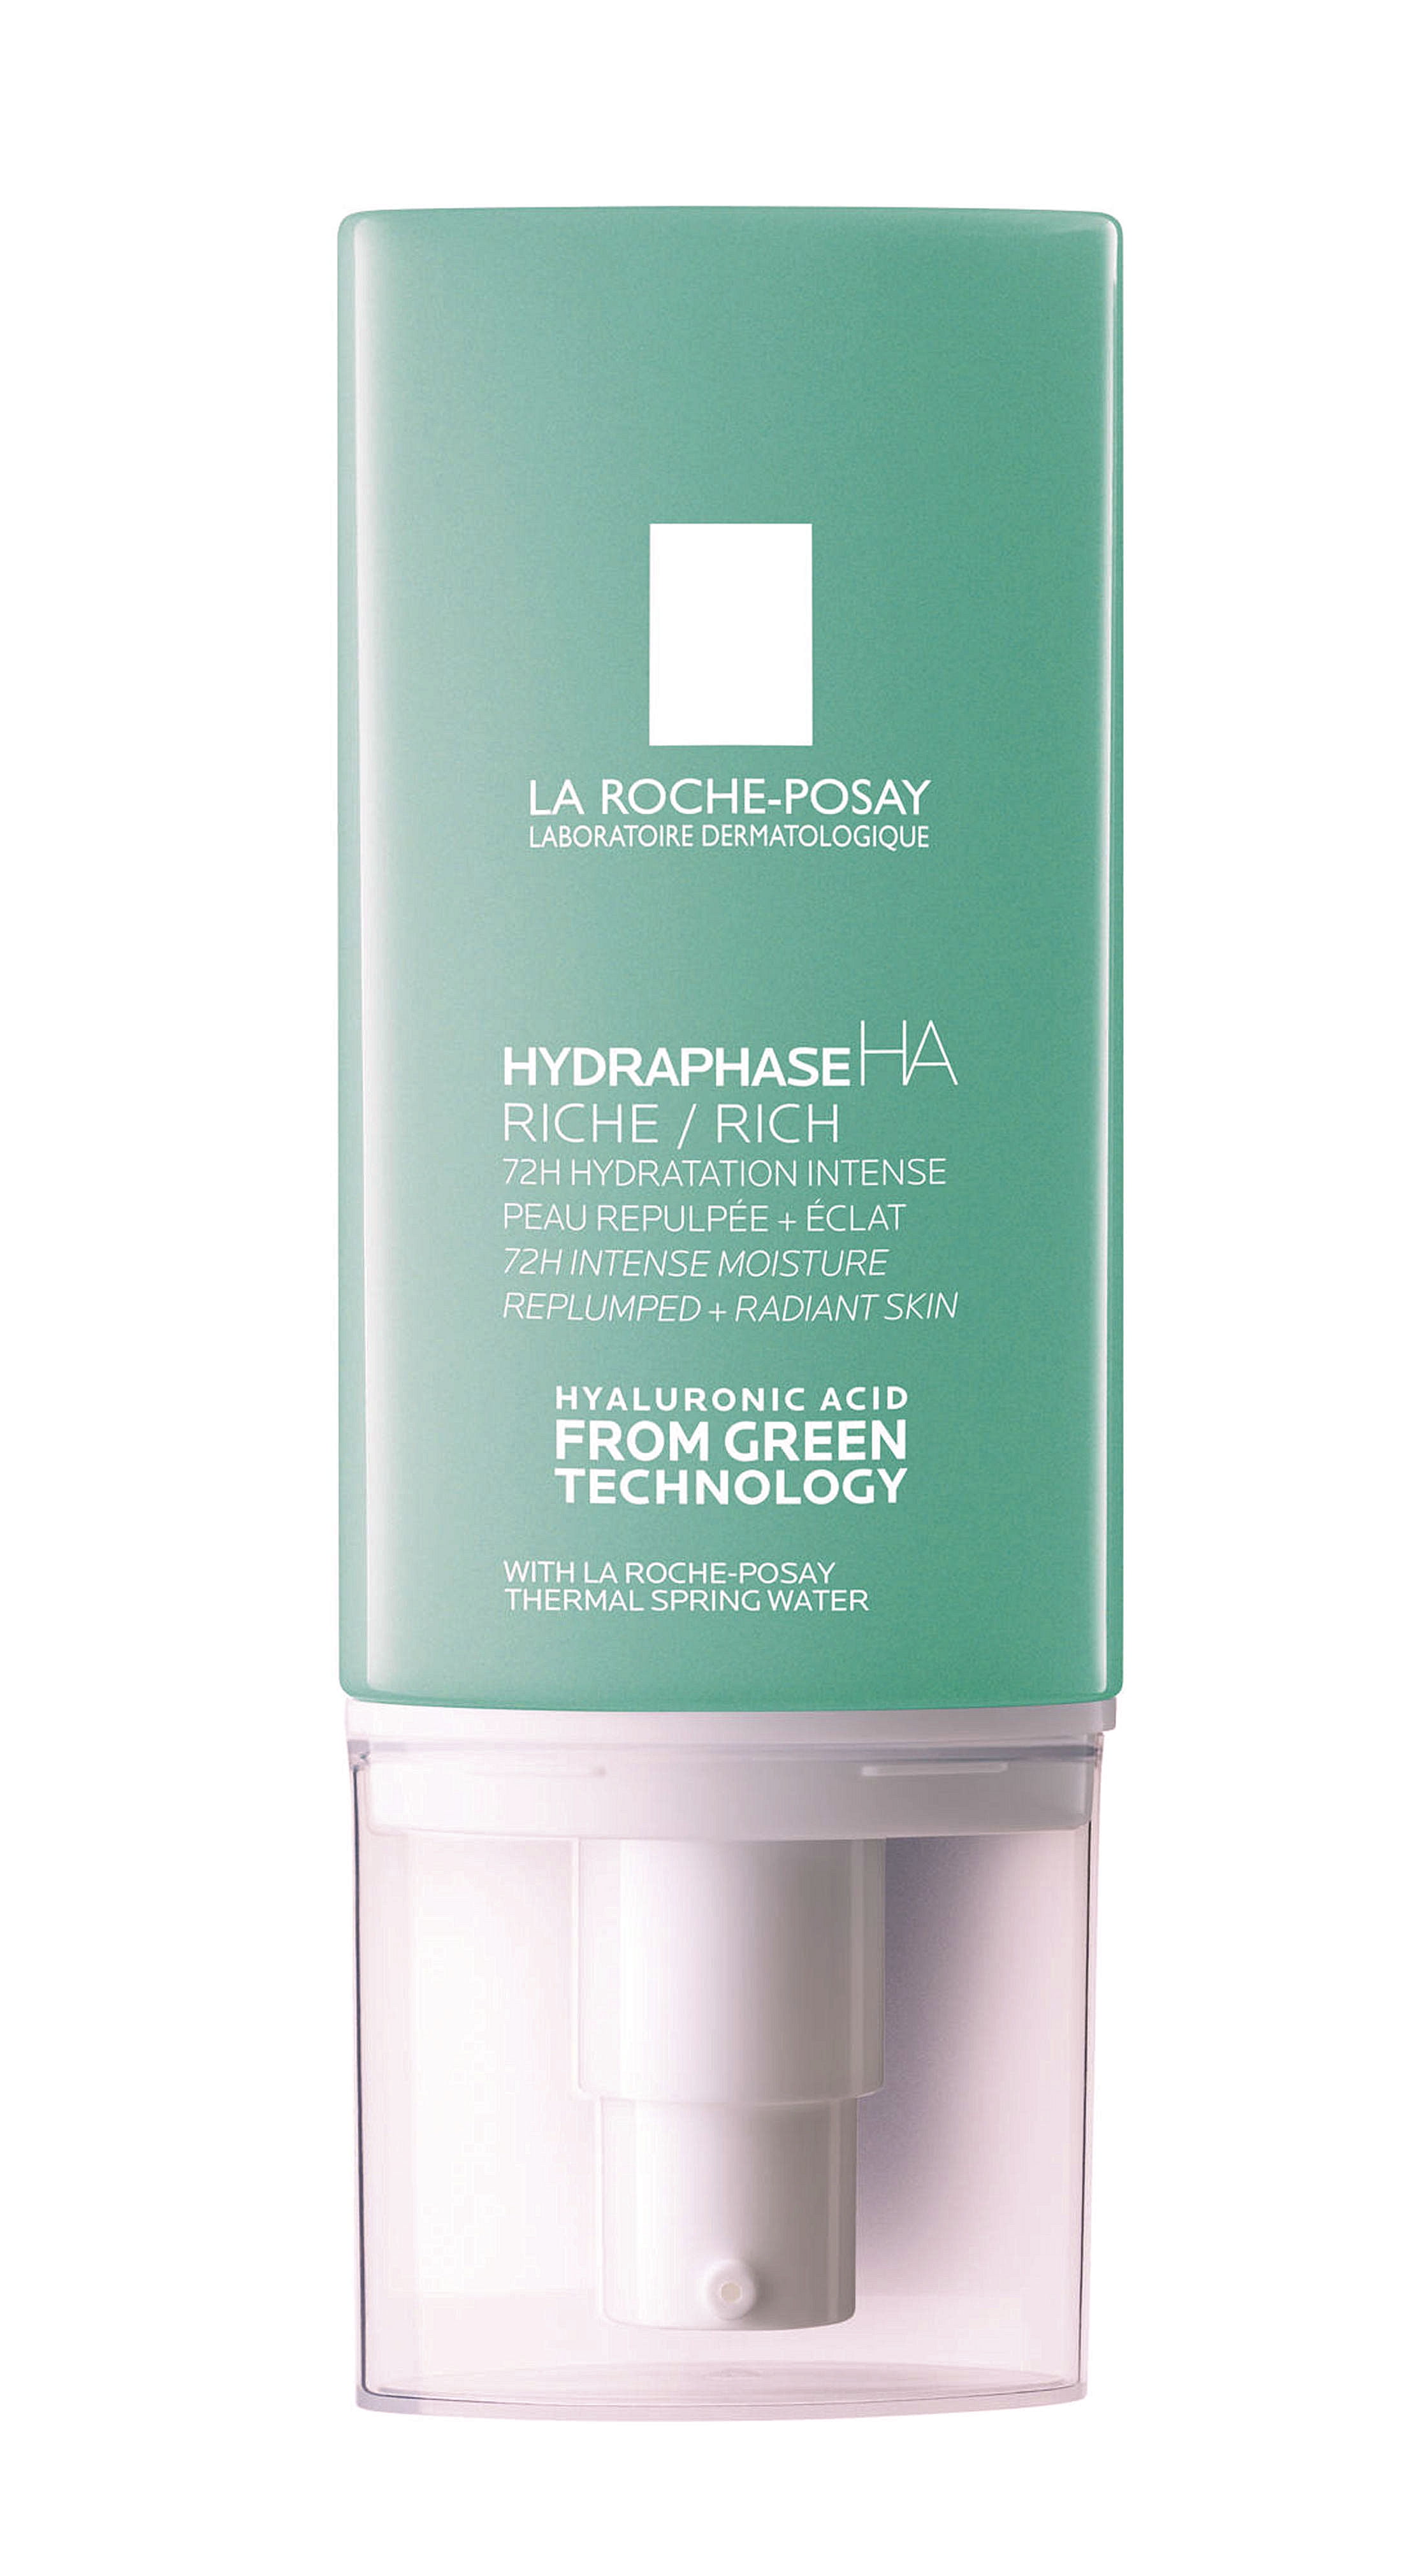 La Roche Posay Hydraphase HA Rich with Hyaluronic Acid Facial Moisturizer oz. (50ml) - Walmart.com